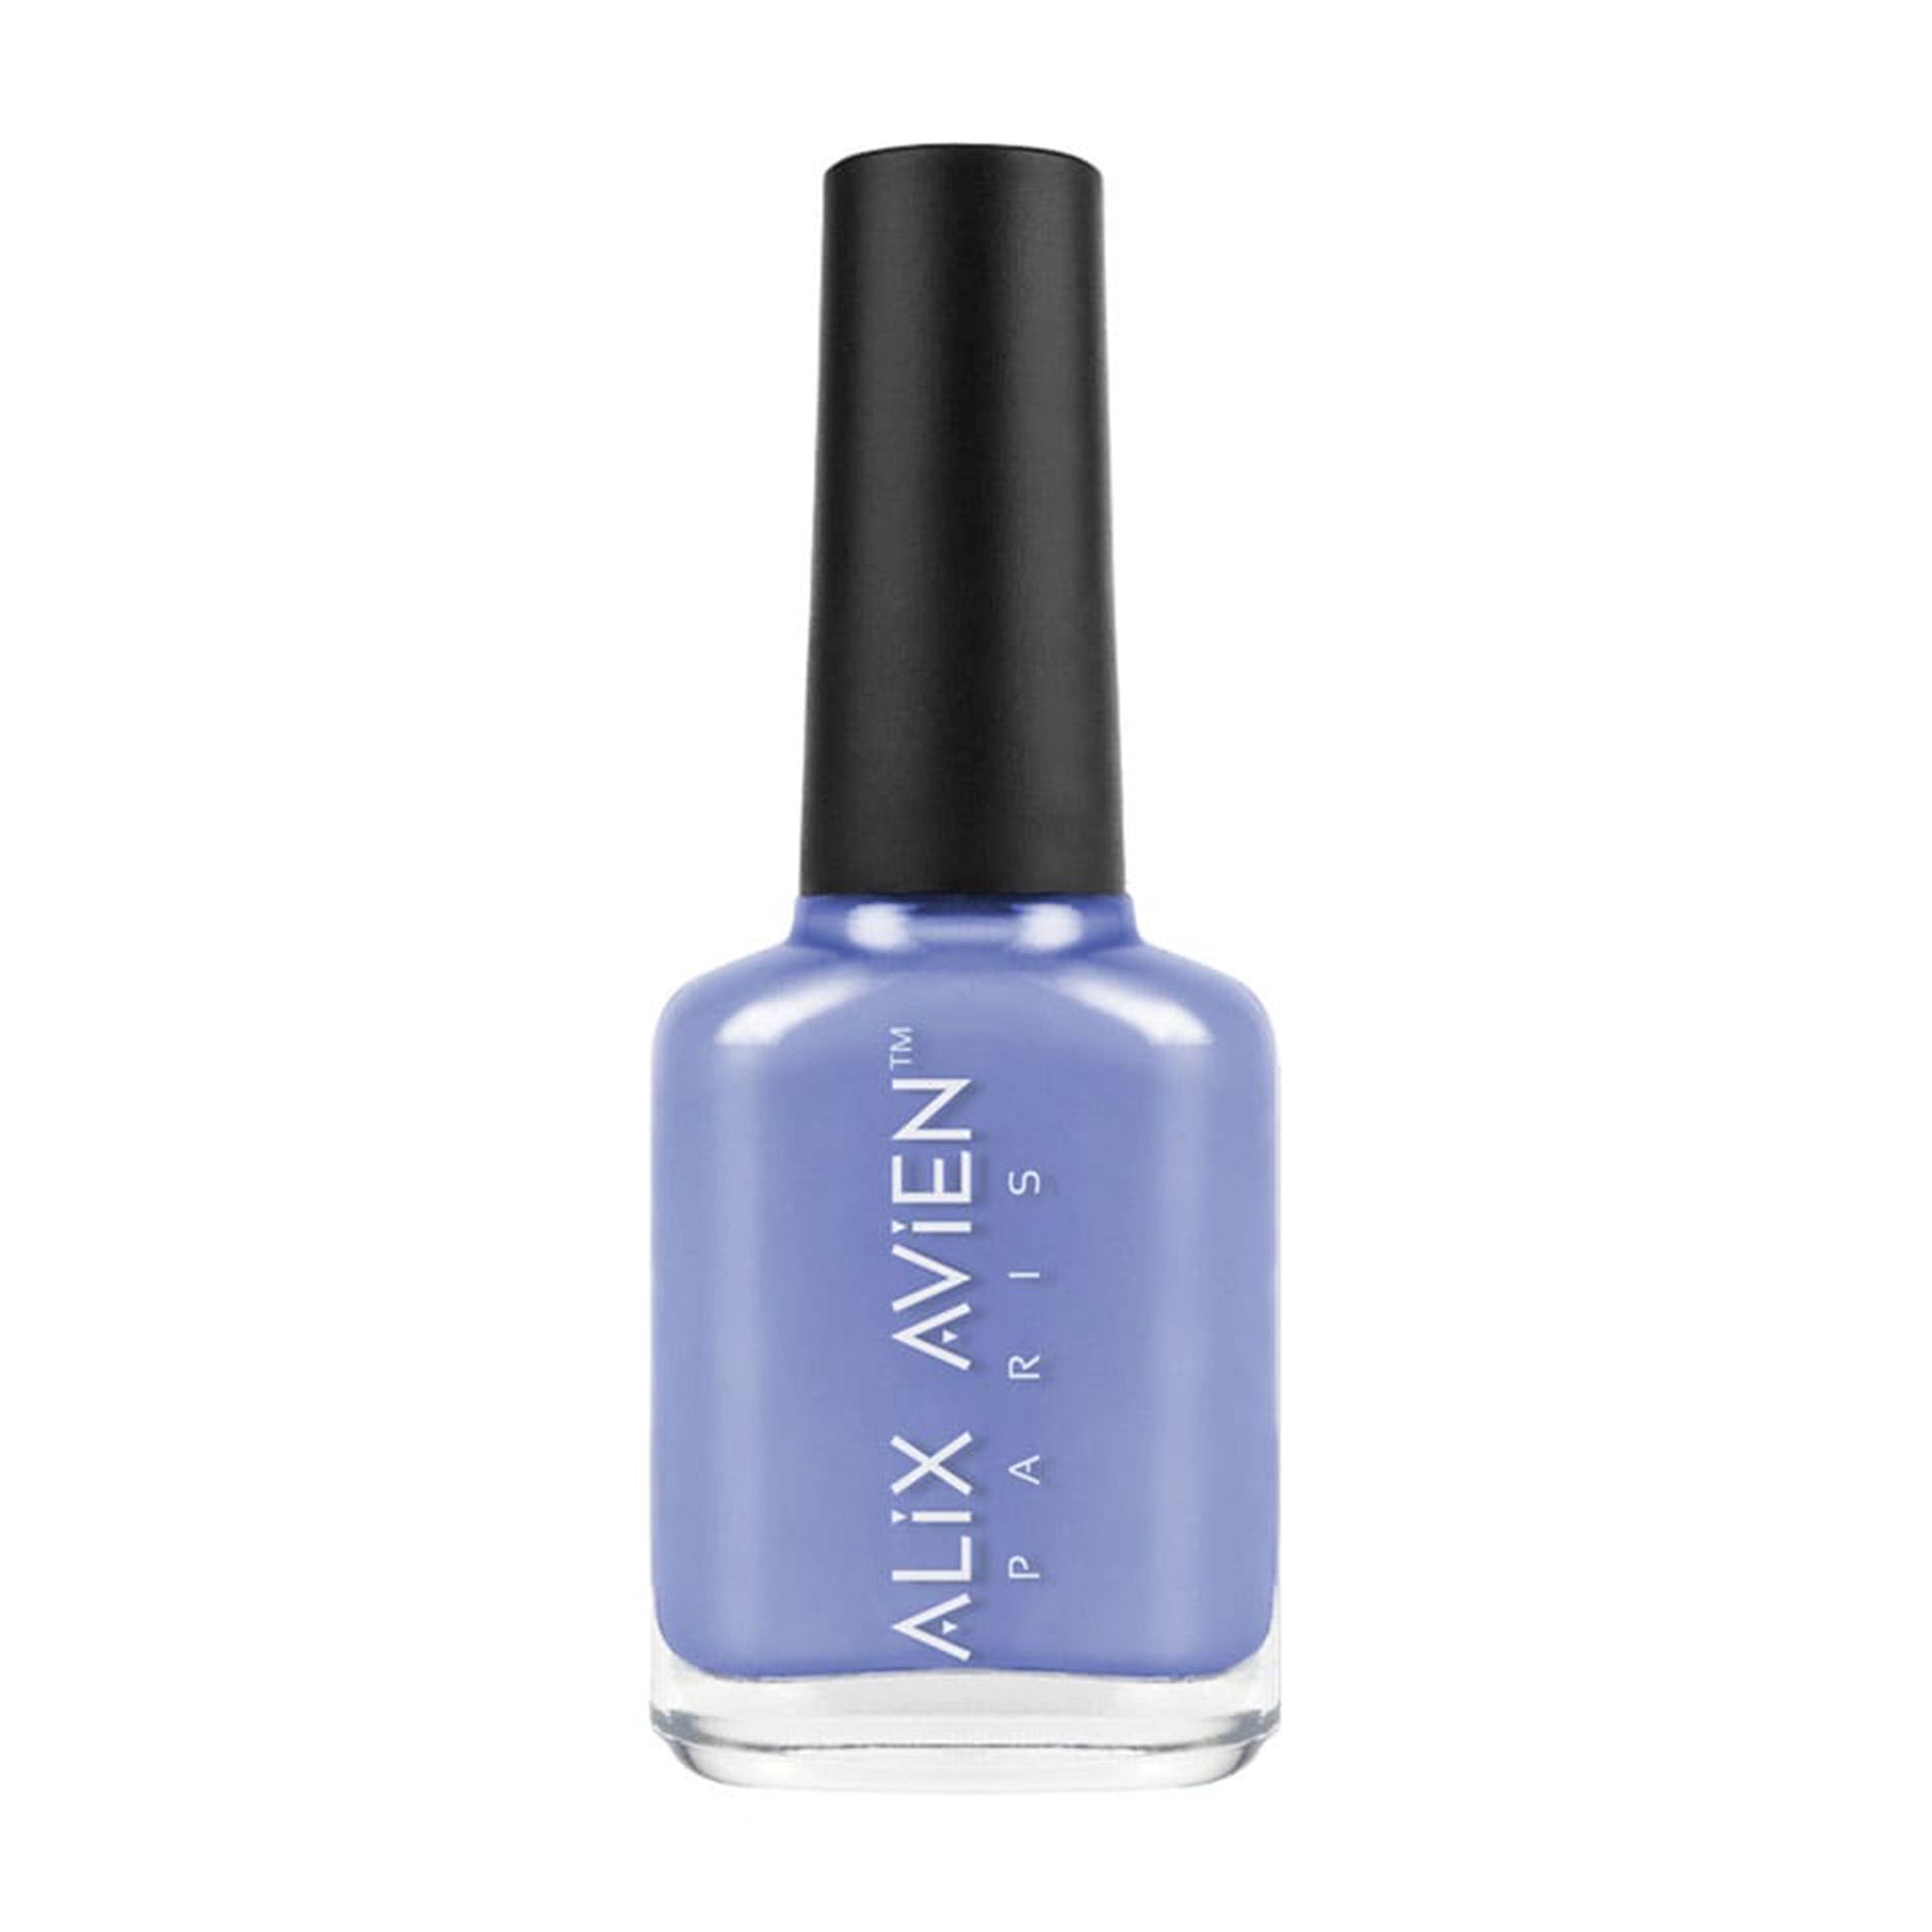 Alix Avien - Nail Polish No.73 (Breezy Blue) - Eson Direct